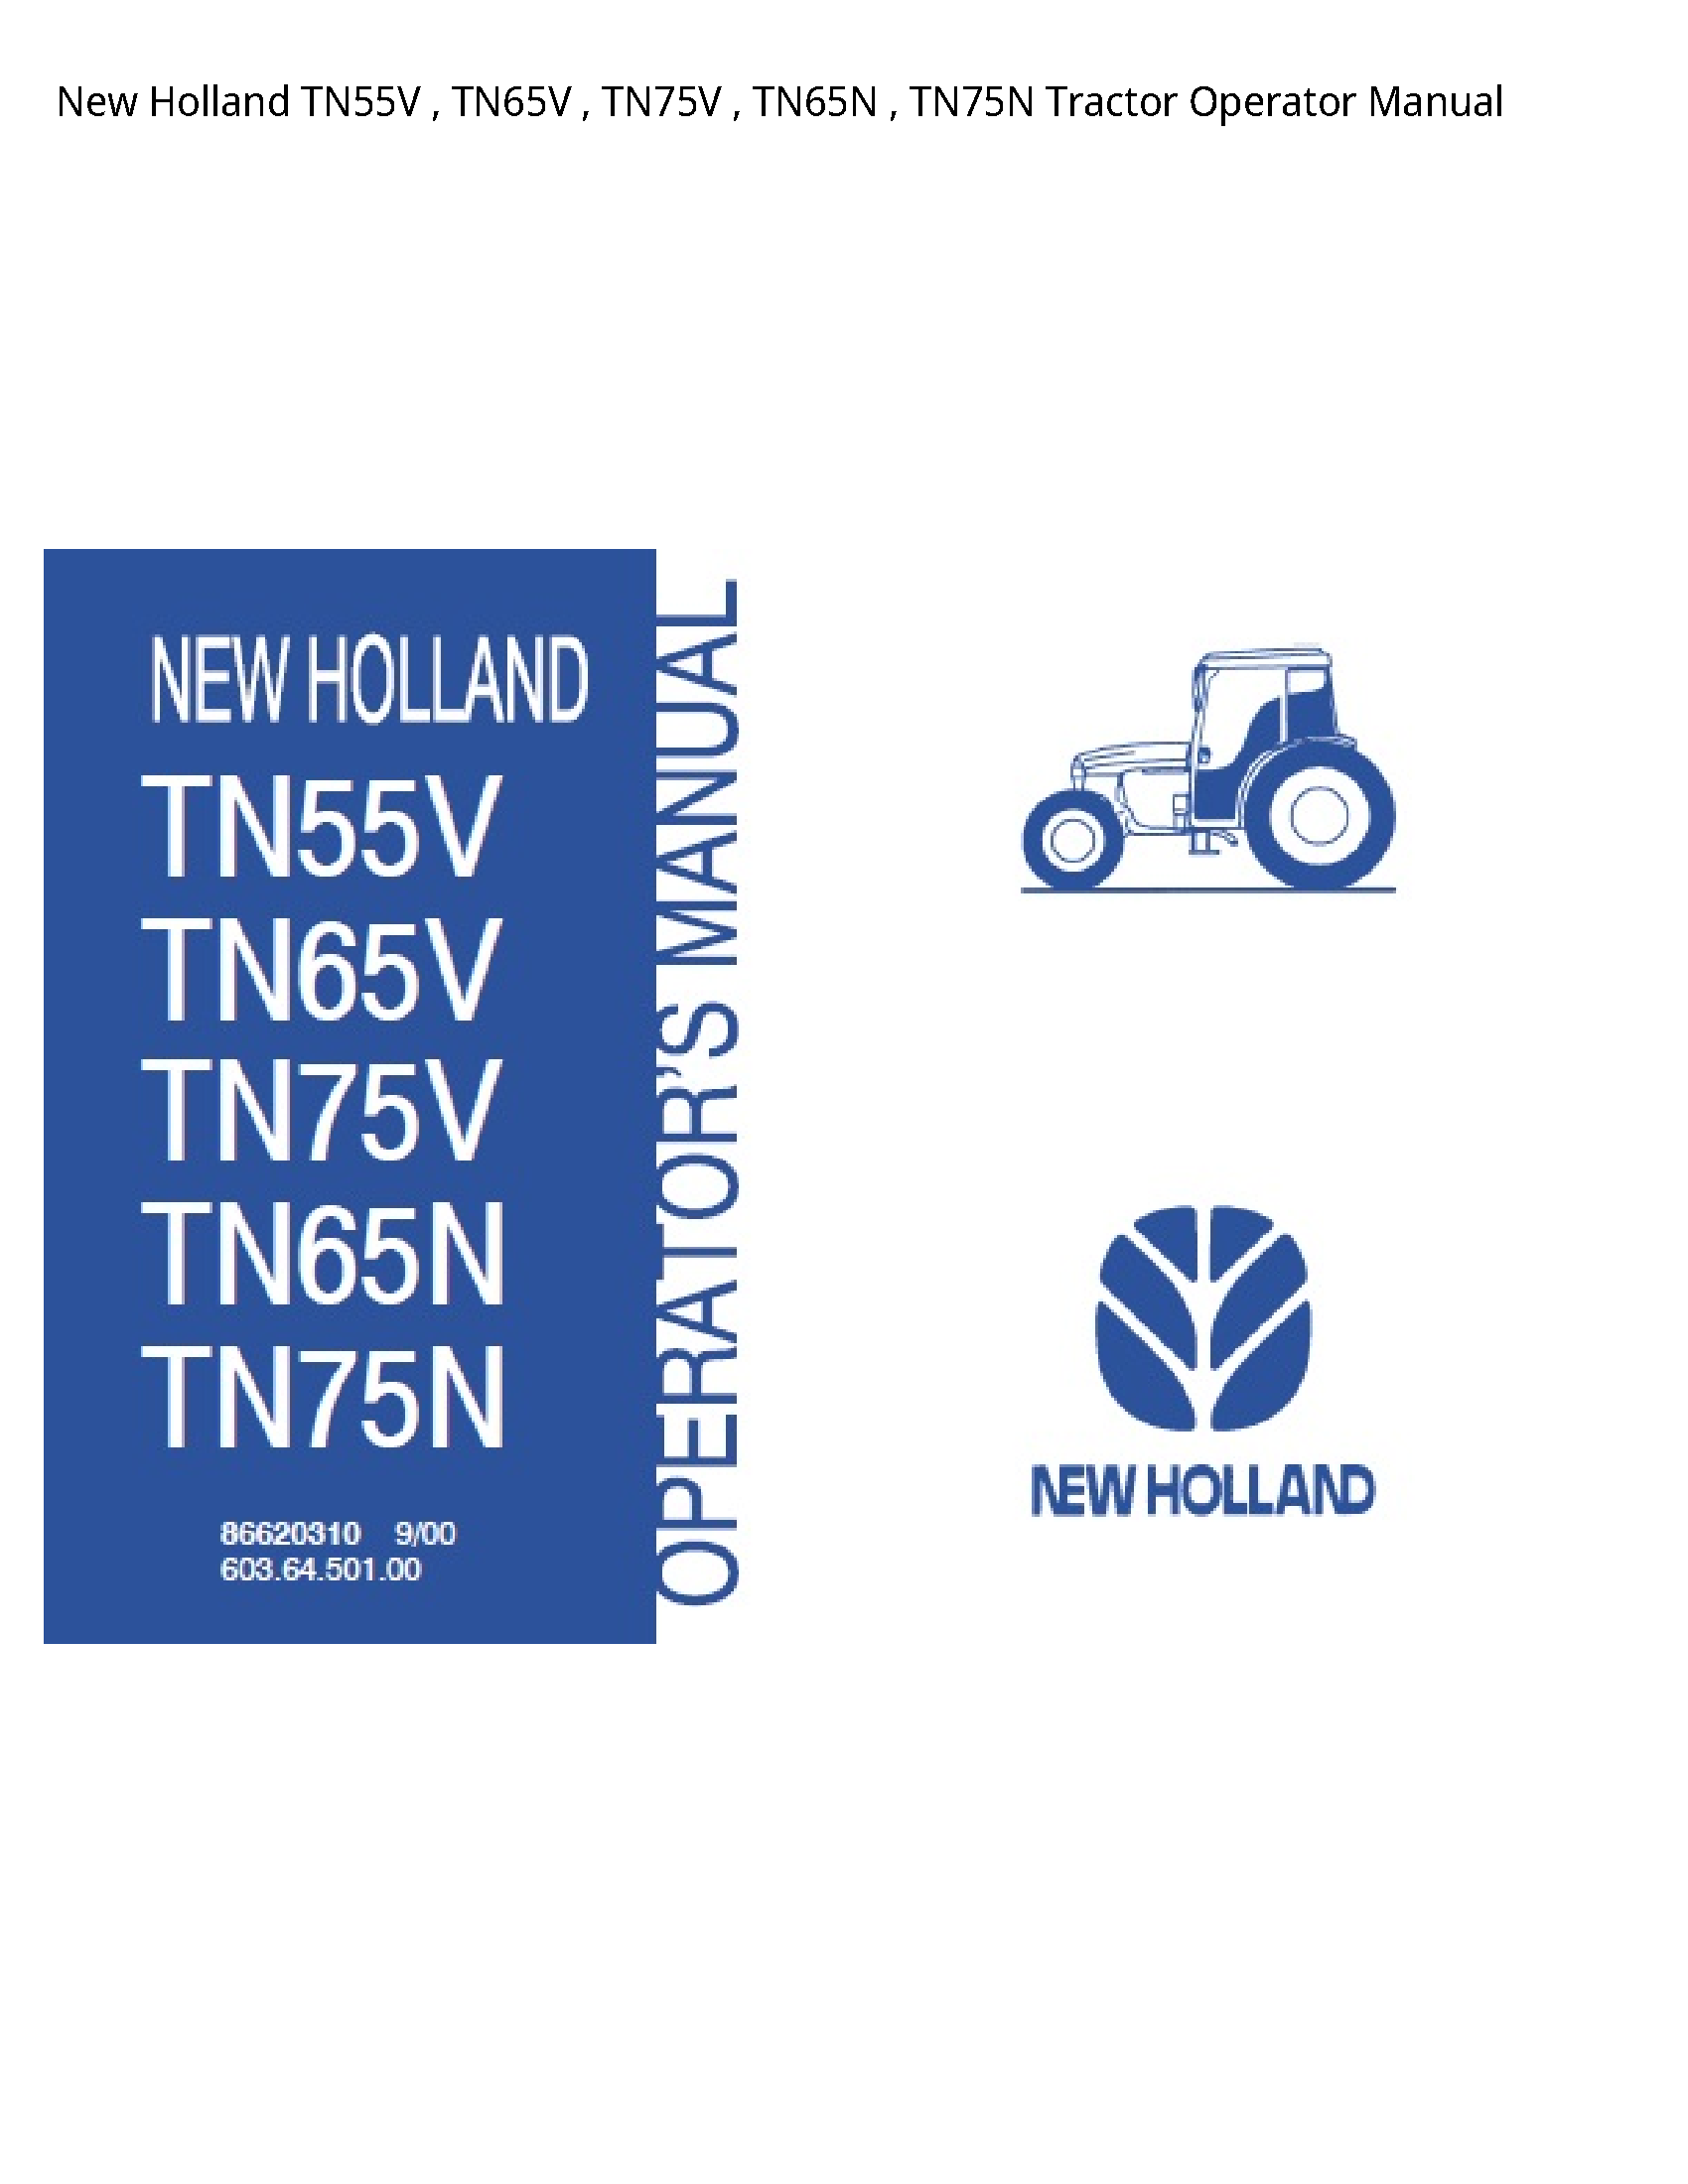 New Holland TN55V Tractor Operator manual